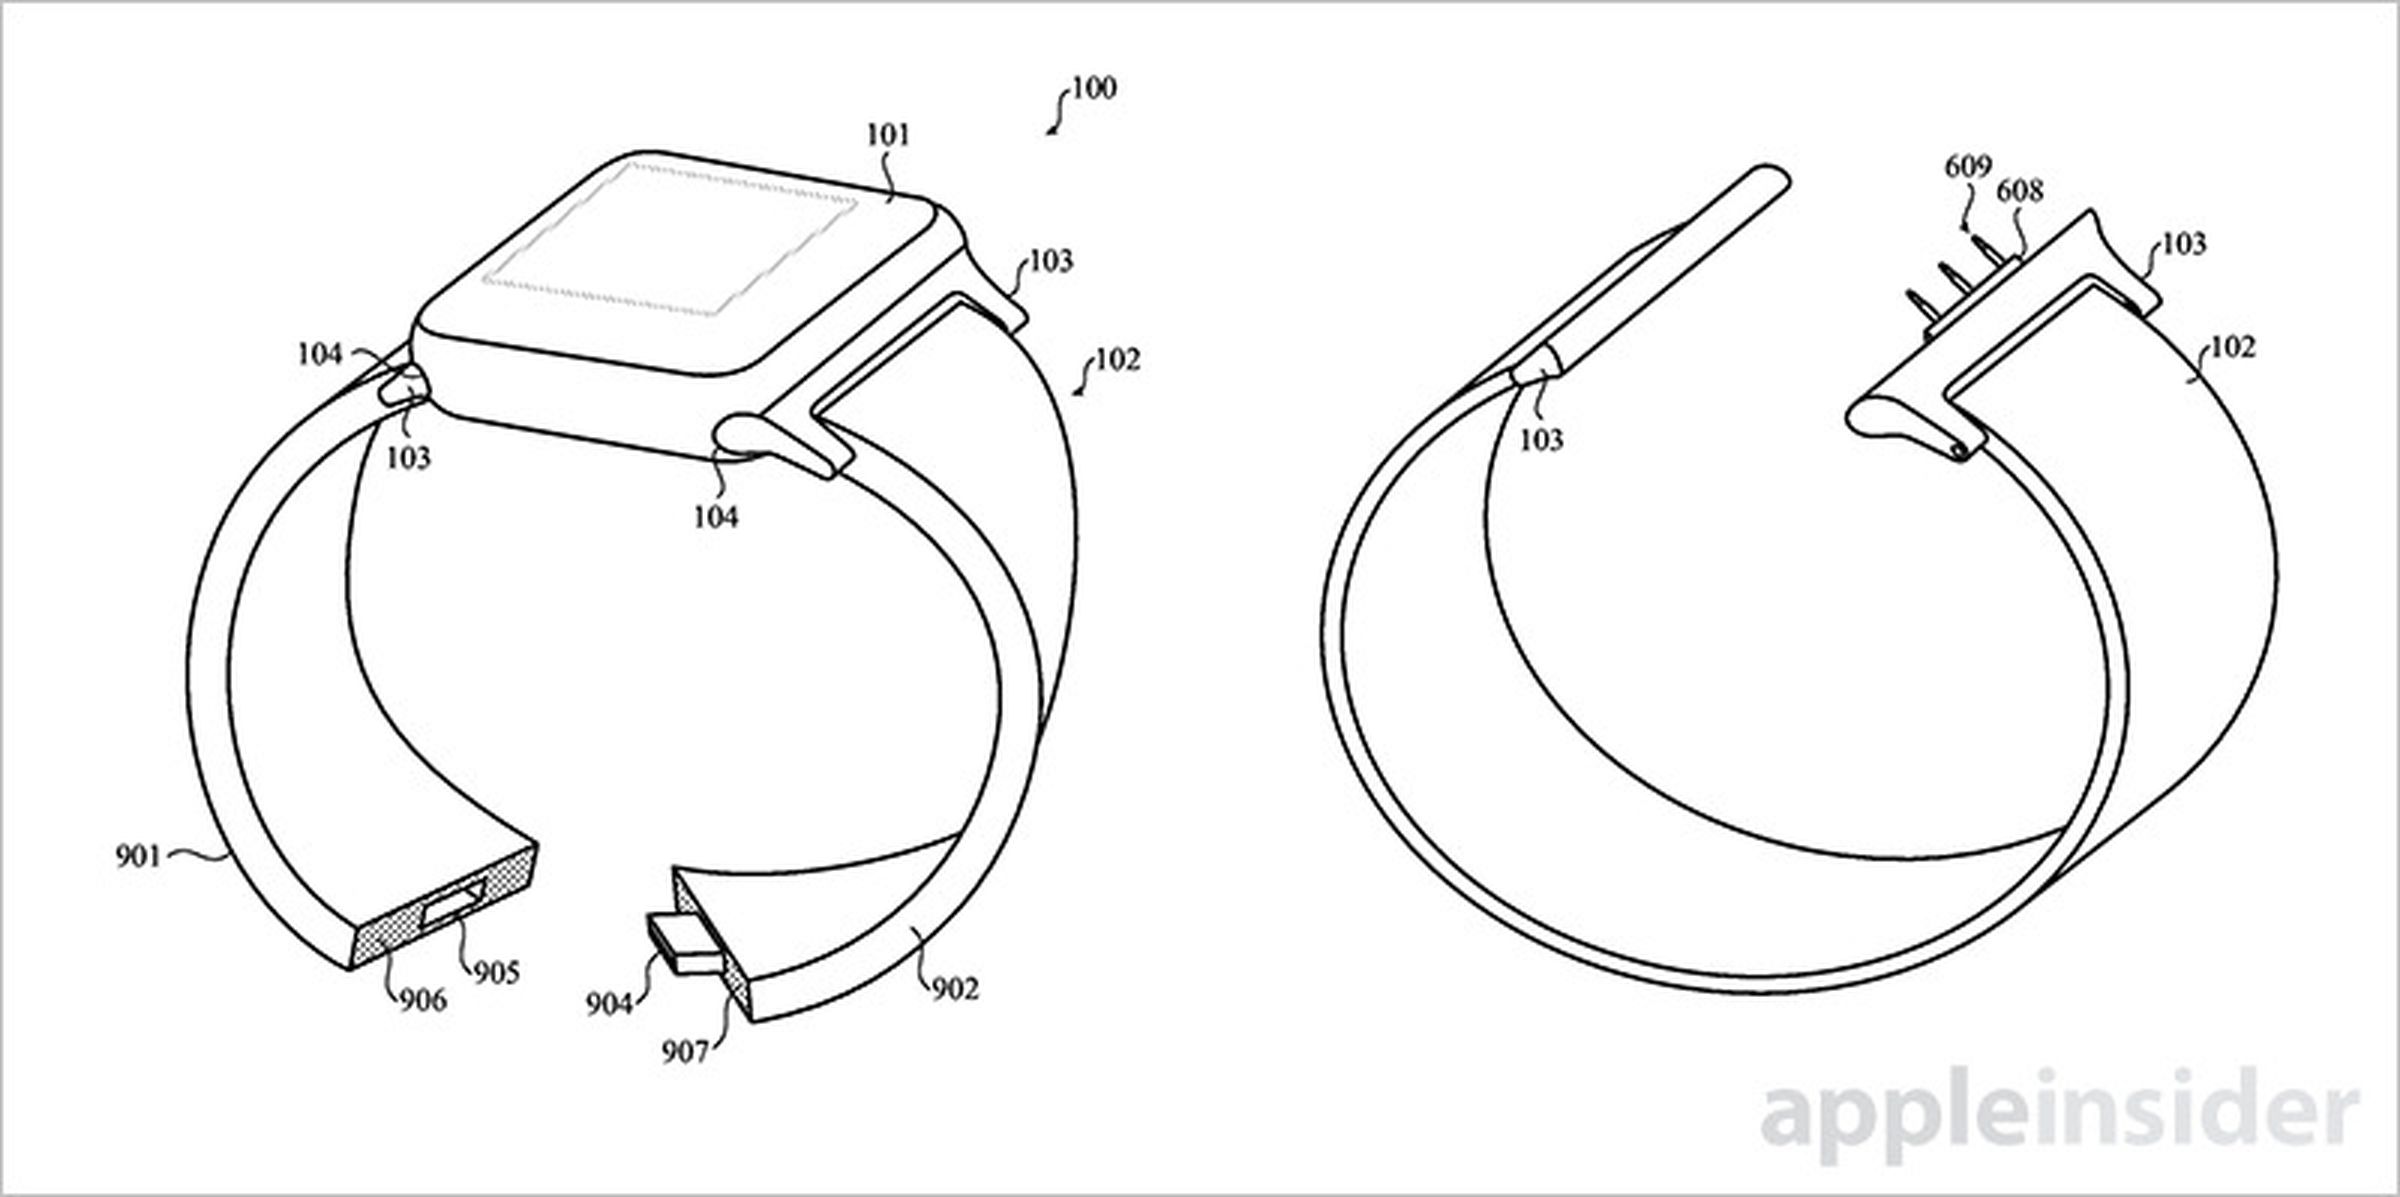 Apple smart band patent